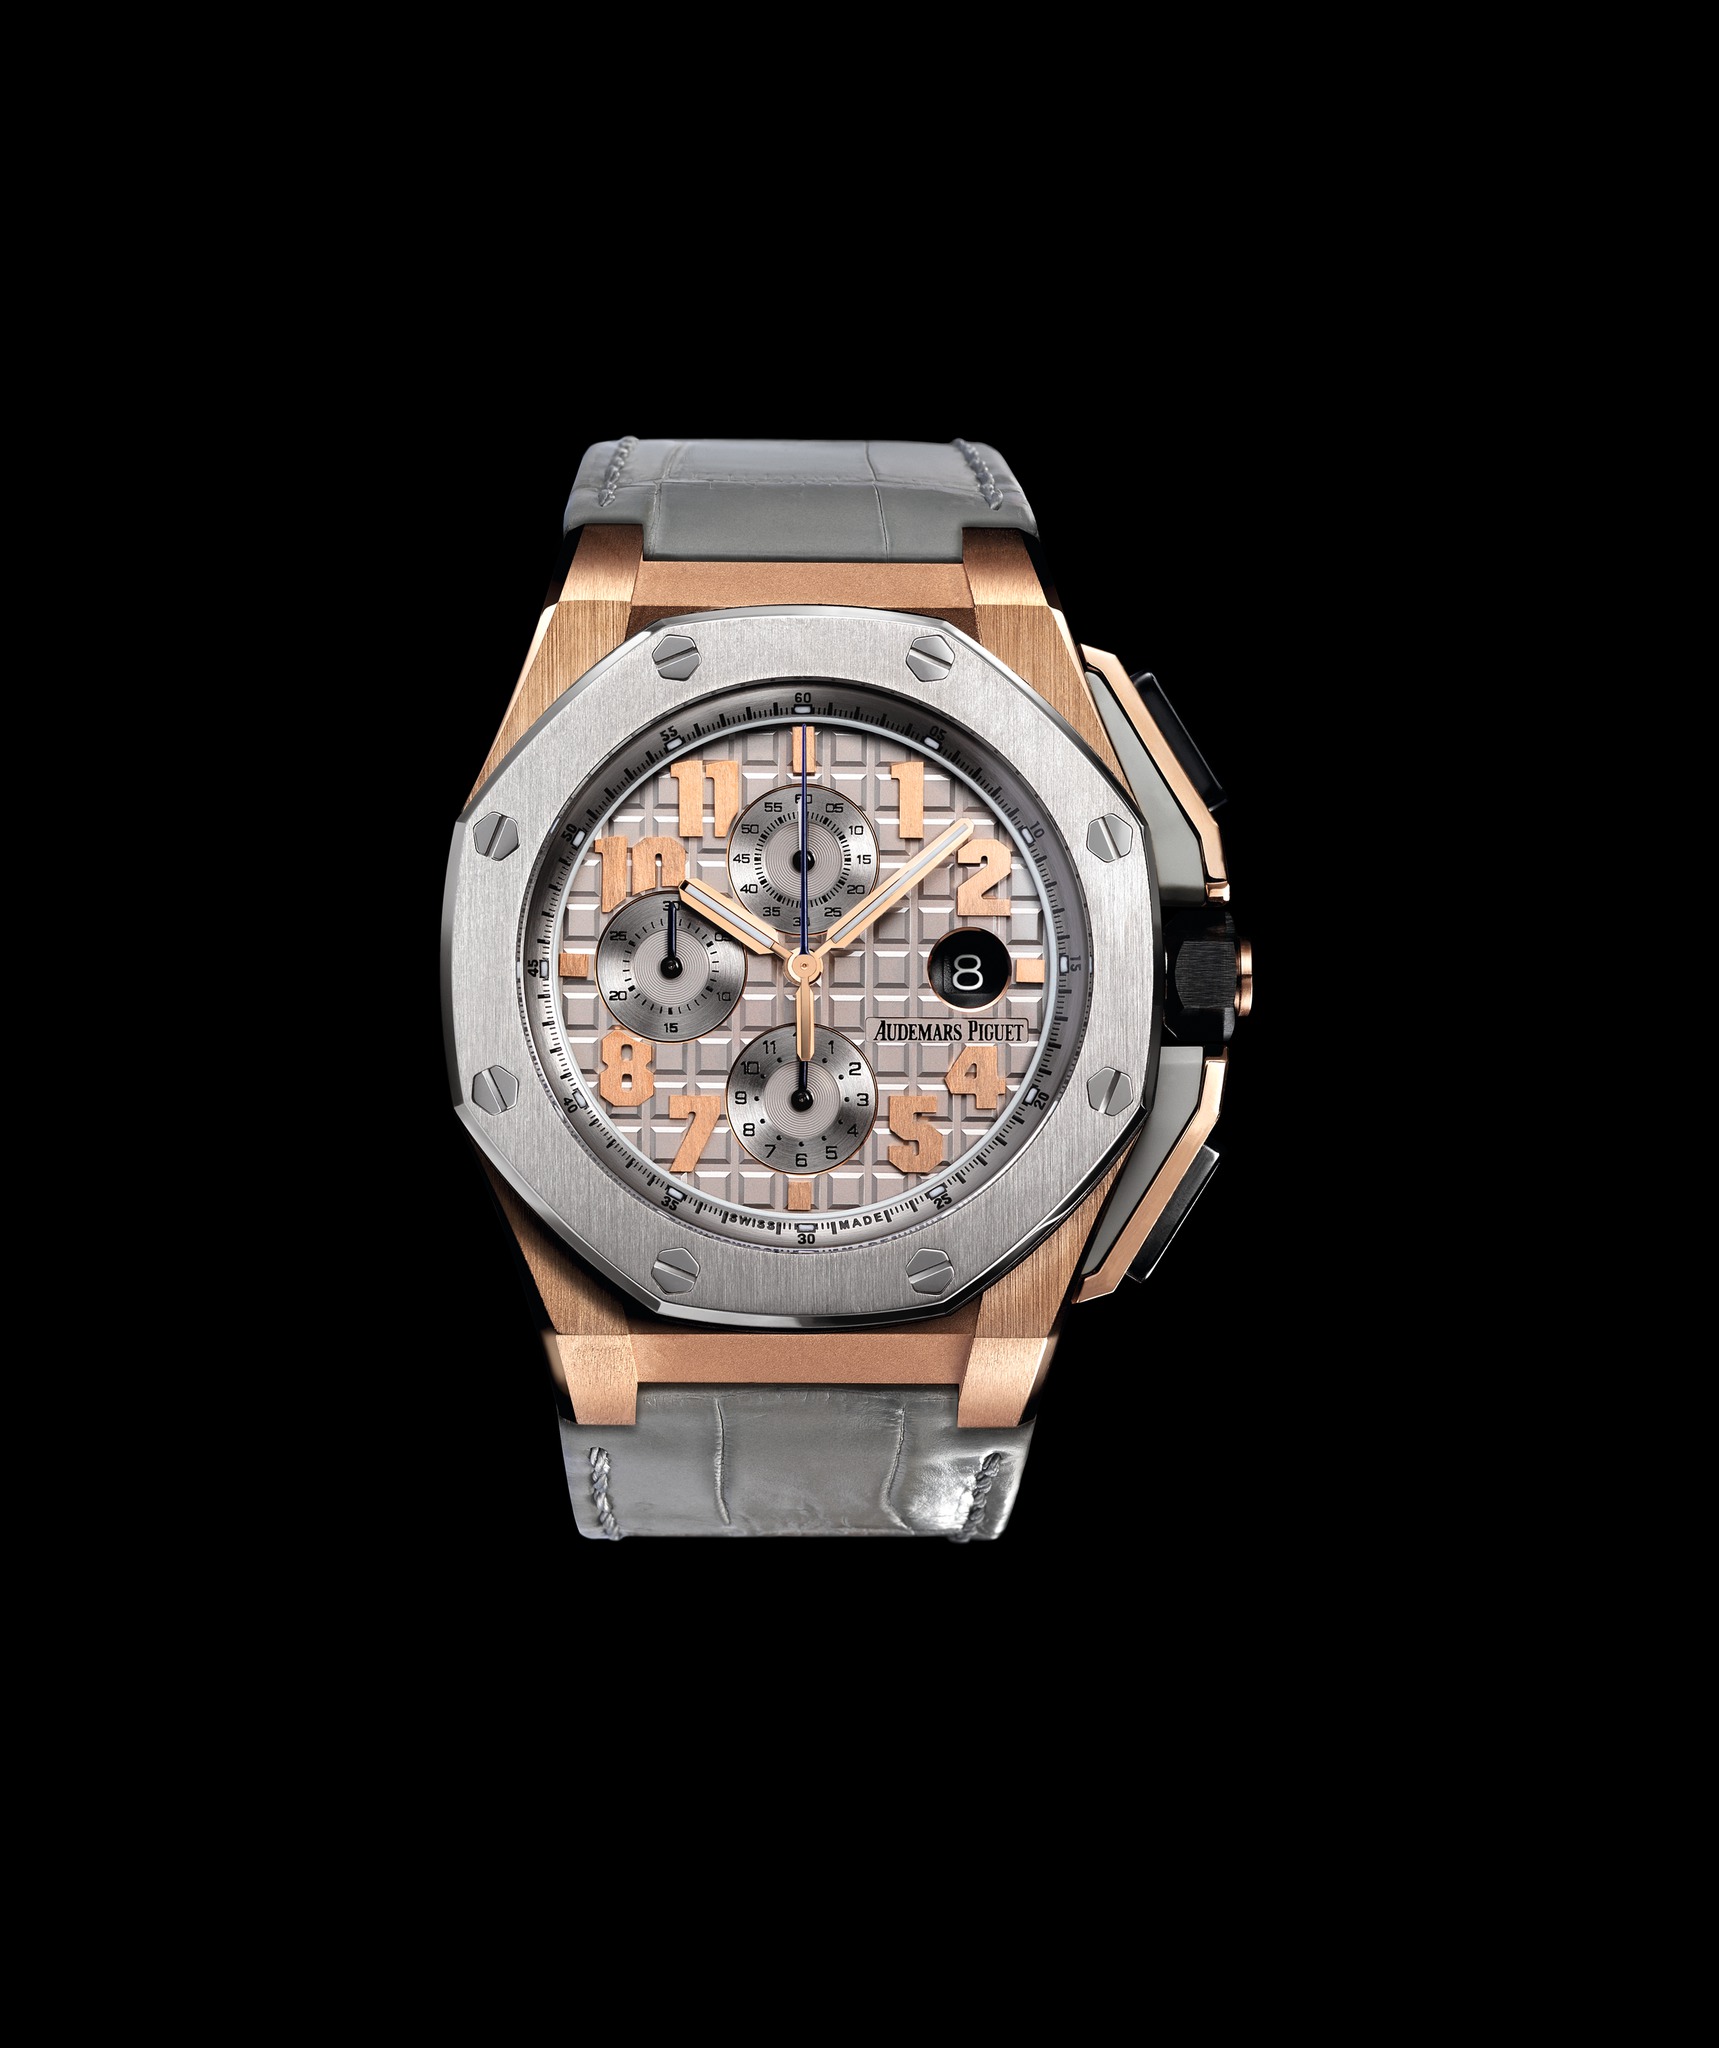 Audemars Piguet Royal Oak Offshore LeBron James Pink Gold watch REF: 26210OI.OO.A109CR.01 - Click Image to Close